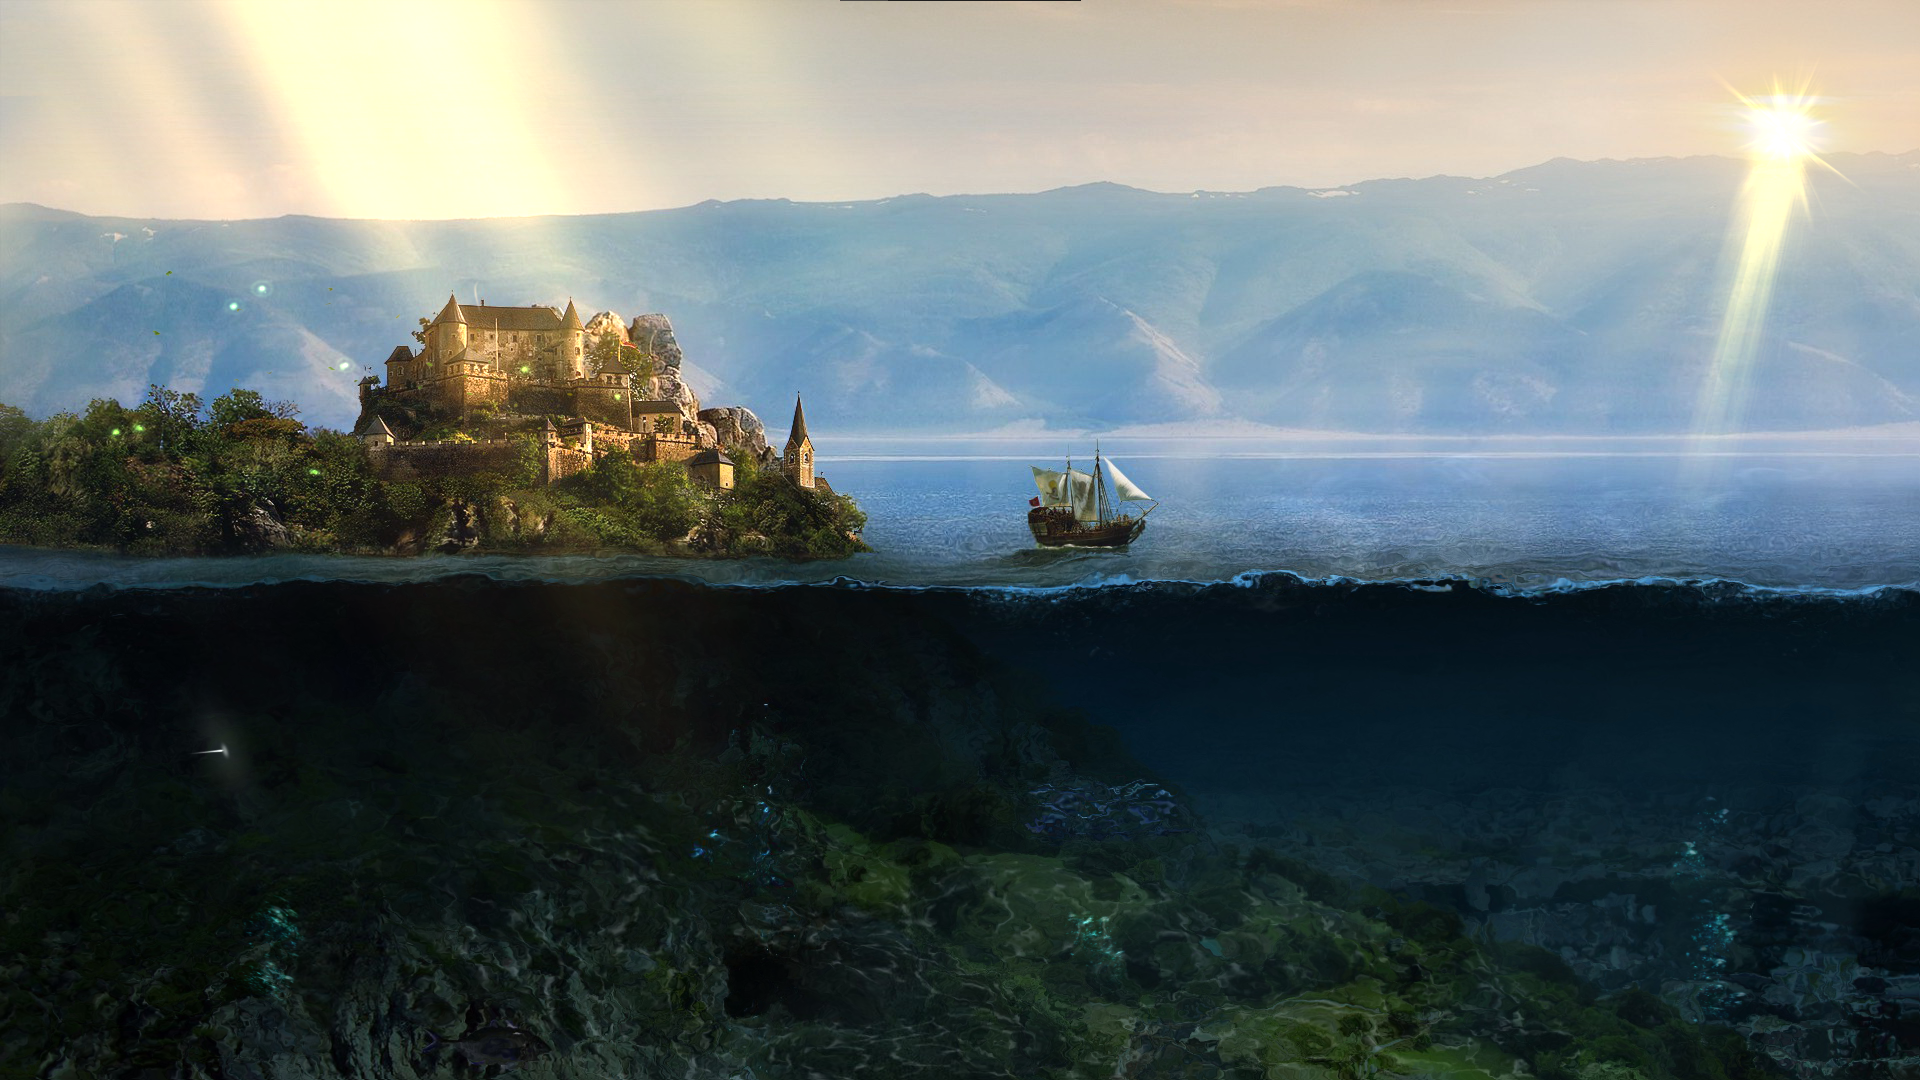 General 1920x1080 island ship castle underwater digital art water natural light sunlight sailing